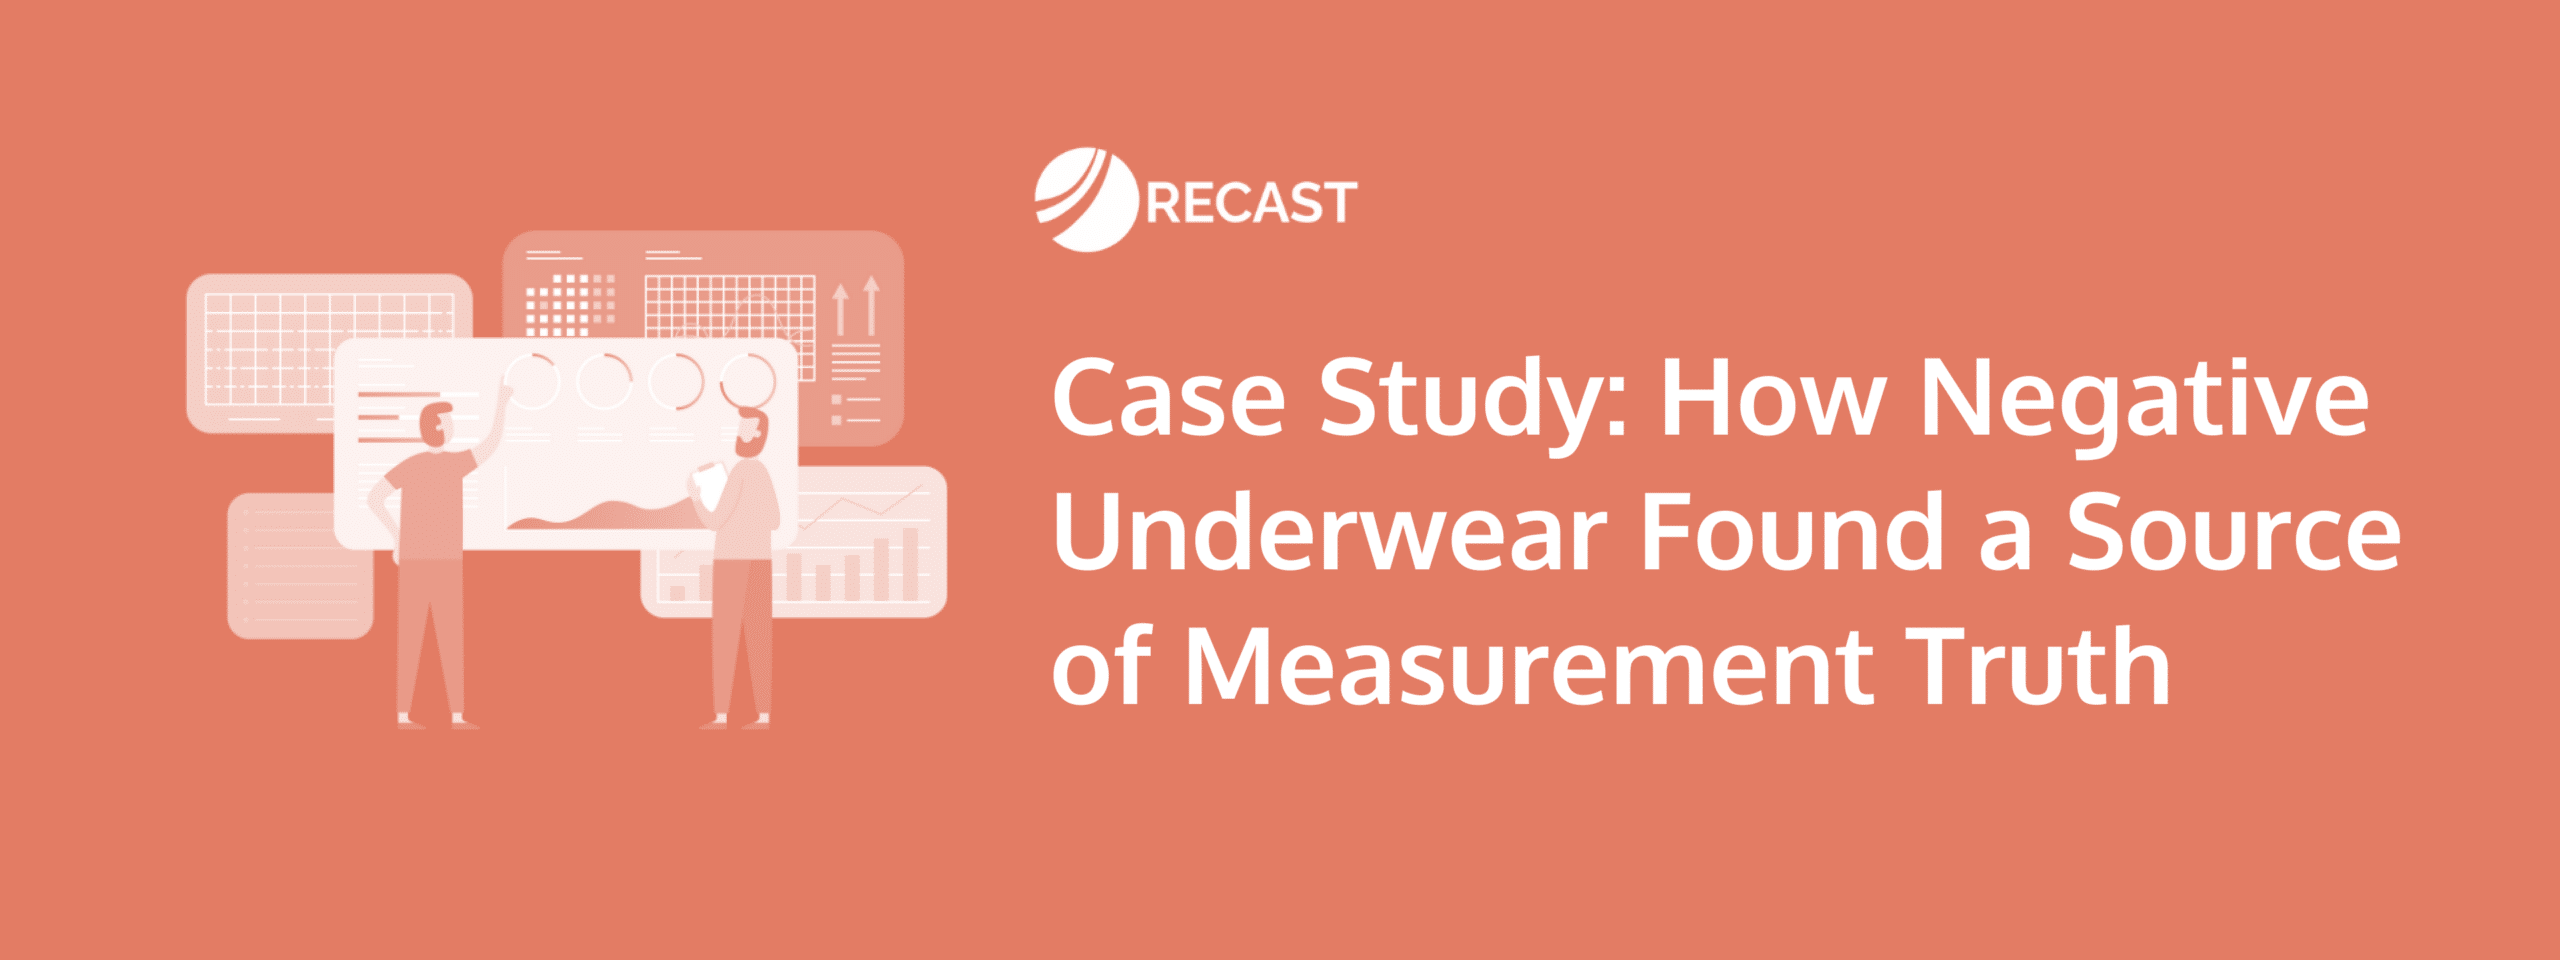 How Negative Underwear Found Their Measurement Source of Truth